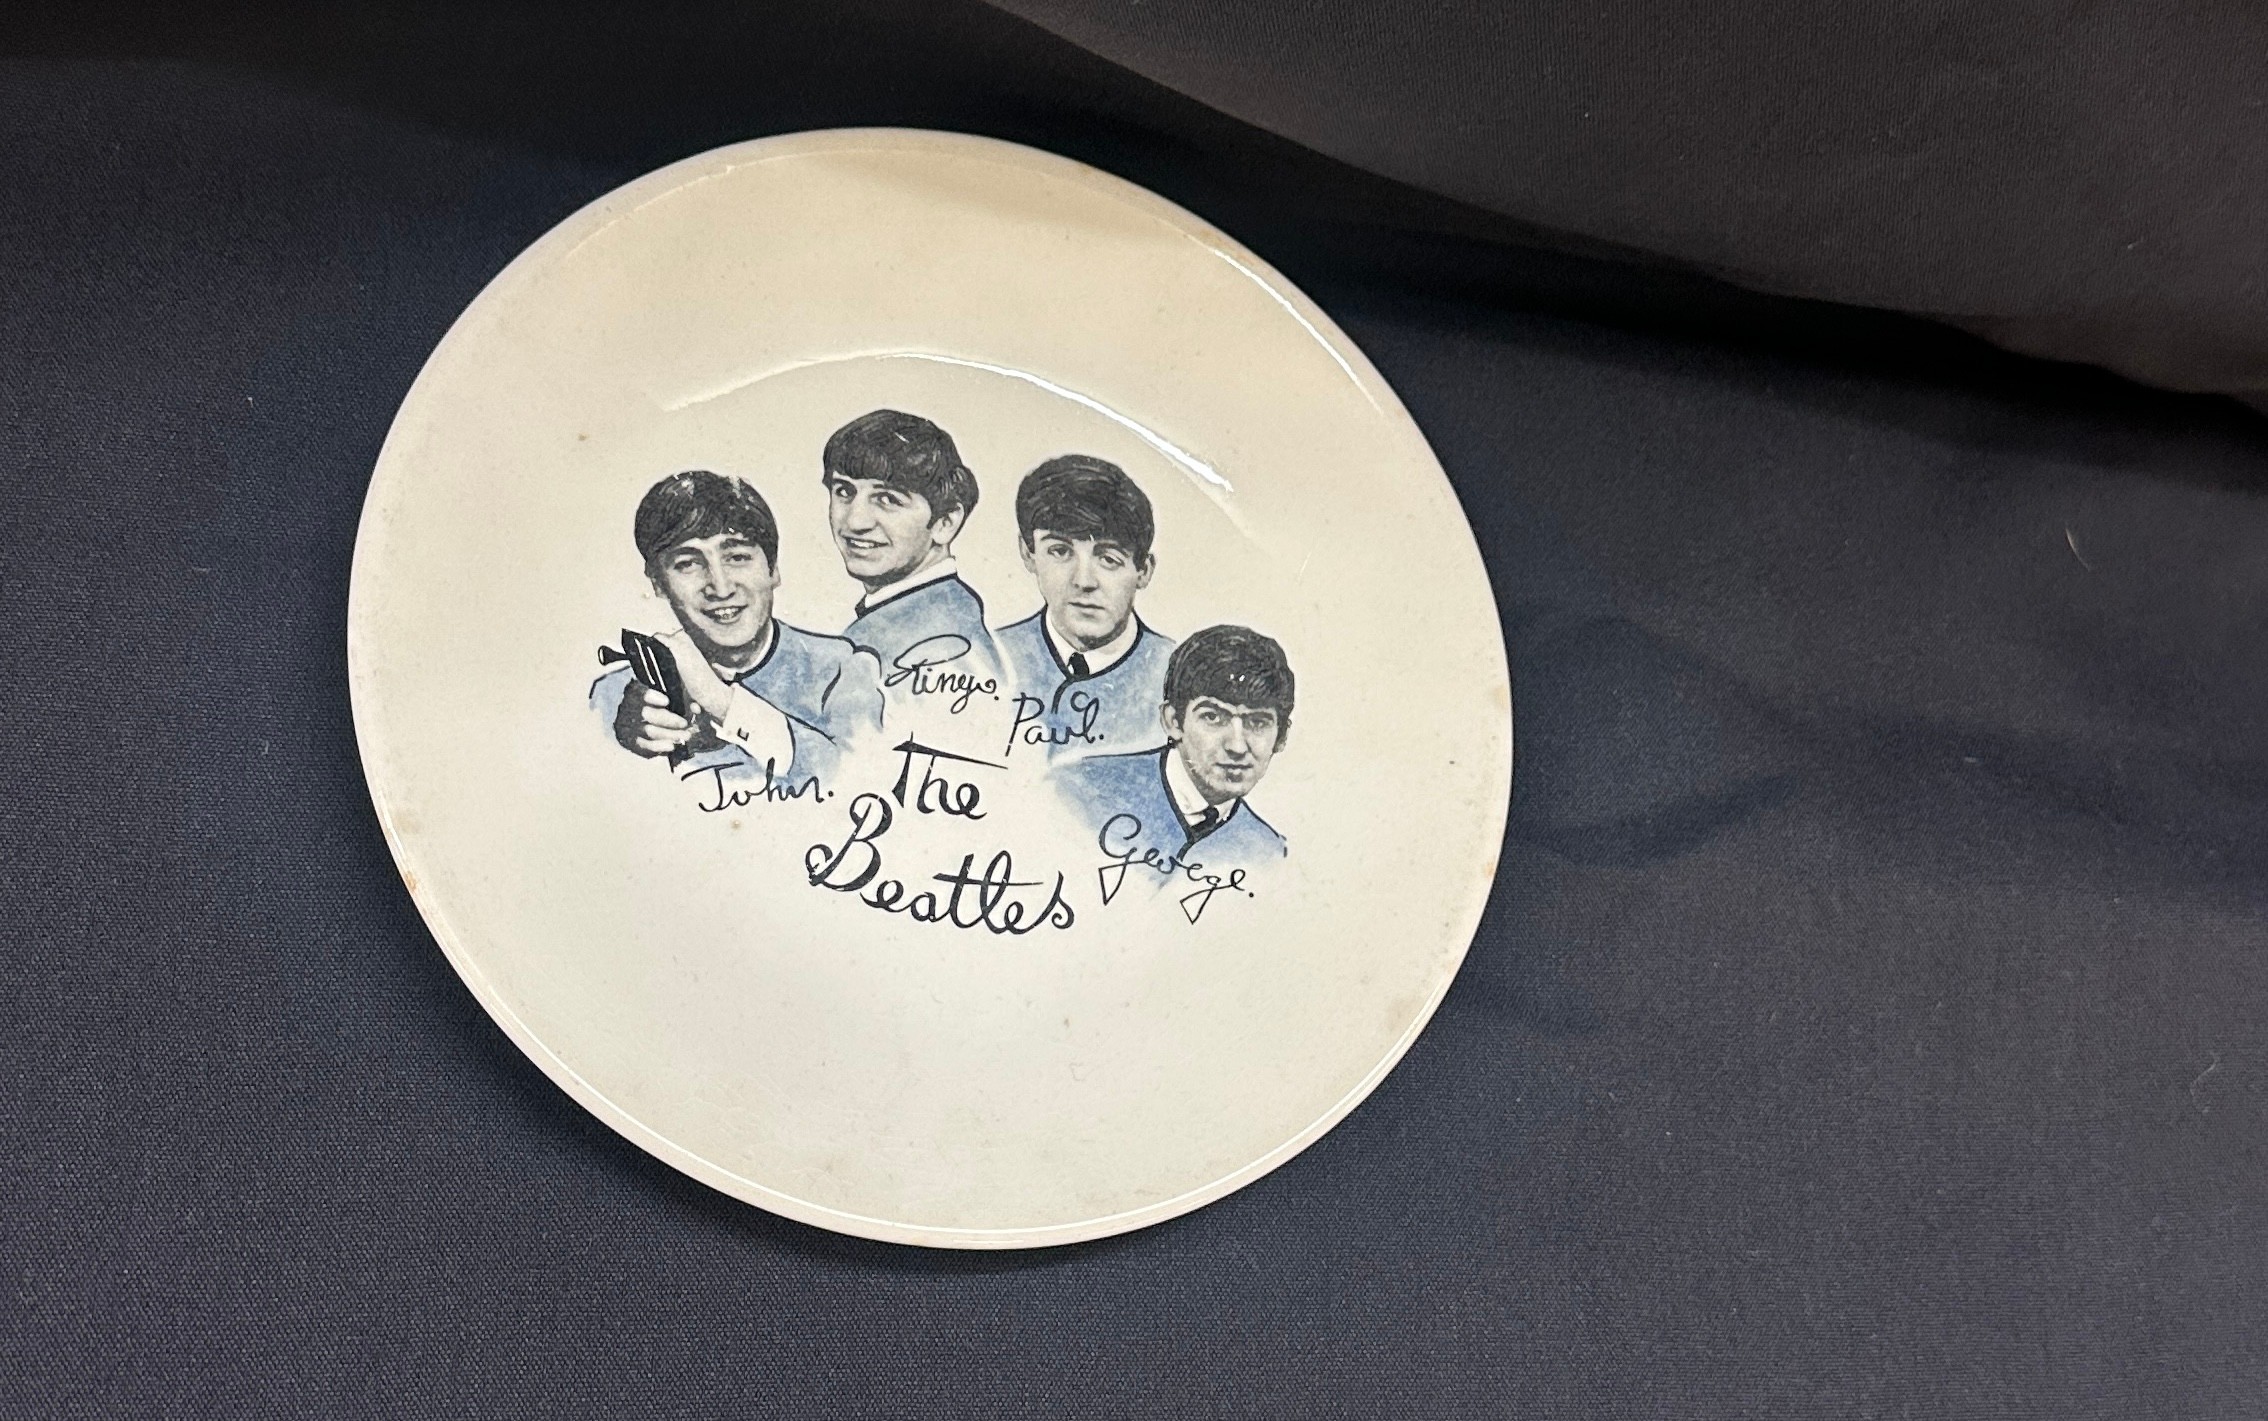 Original 60's era Beatles plate measures approx 7 inches diameter - Image 2 of 4